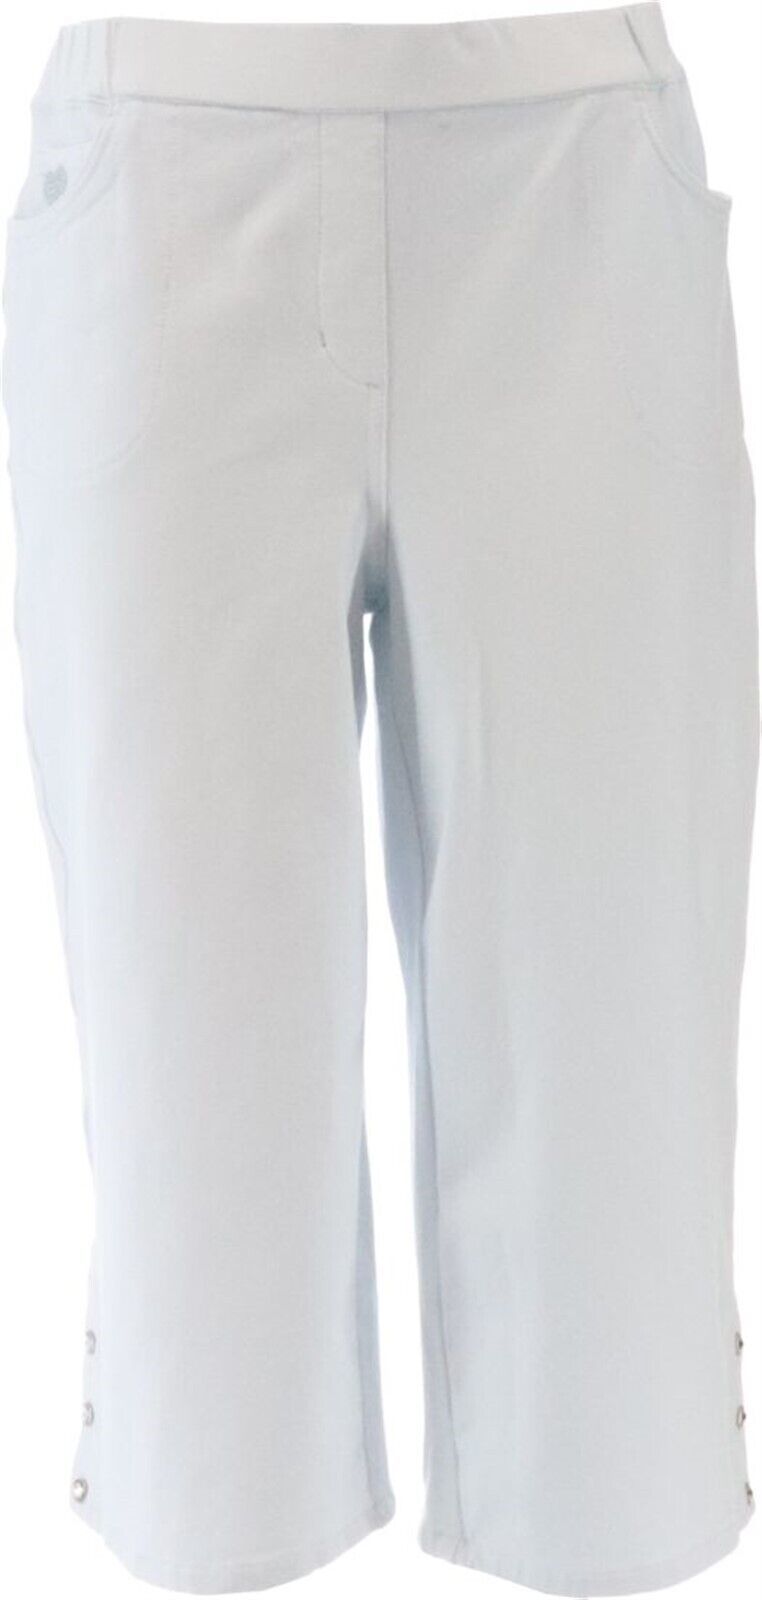 Quacker Factory DreamJeannes Short Wide Leg Culotte Pants White XS NEW A376632